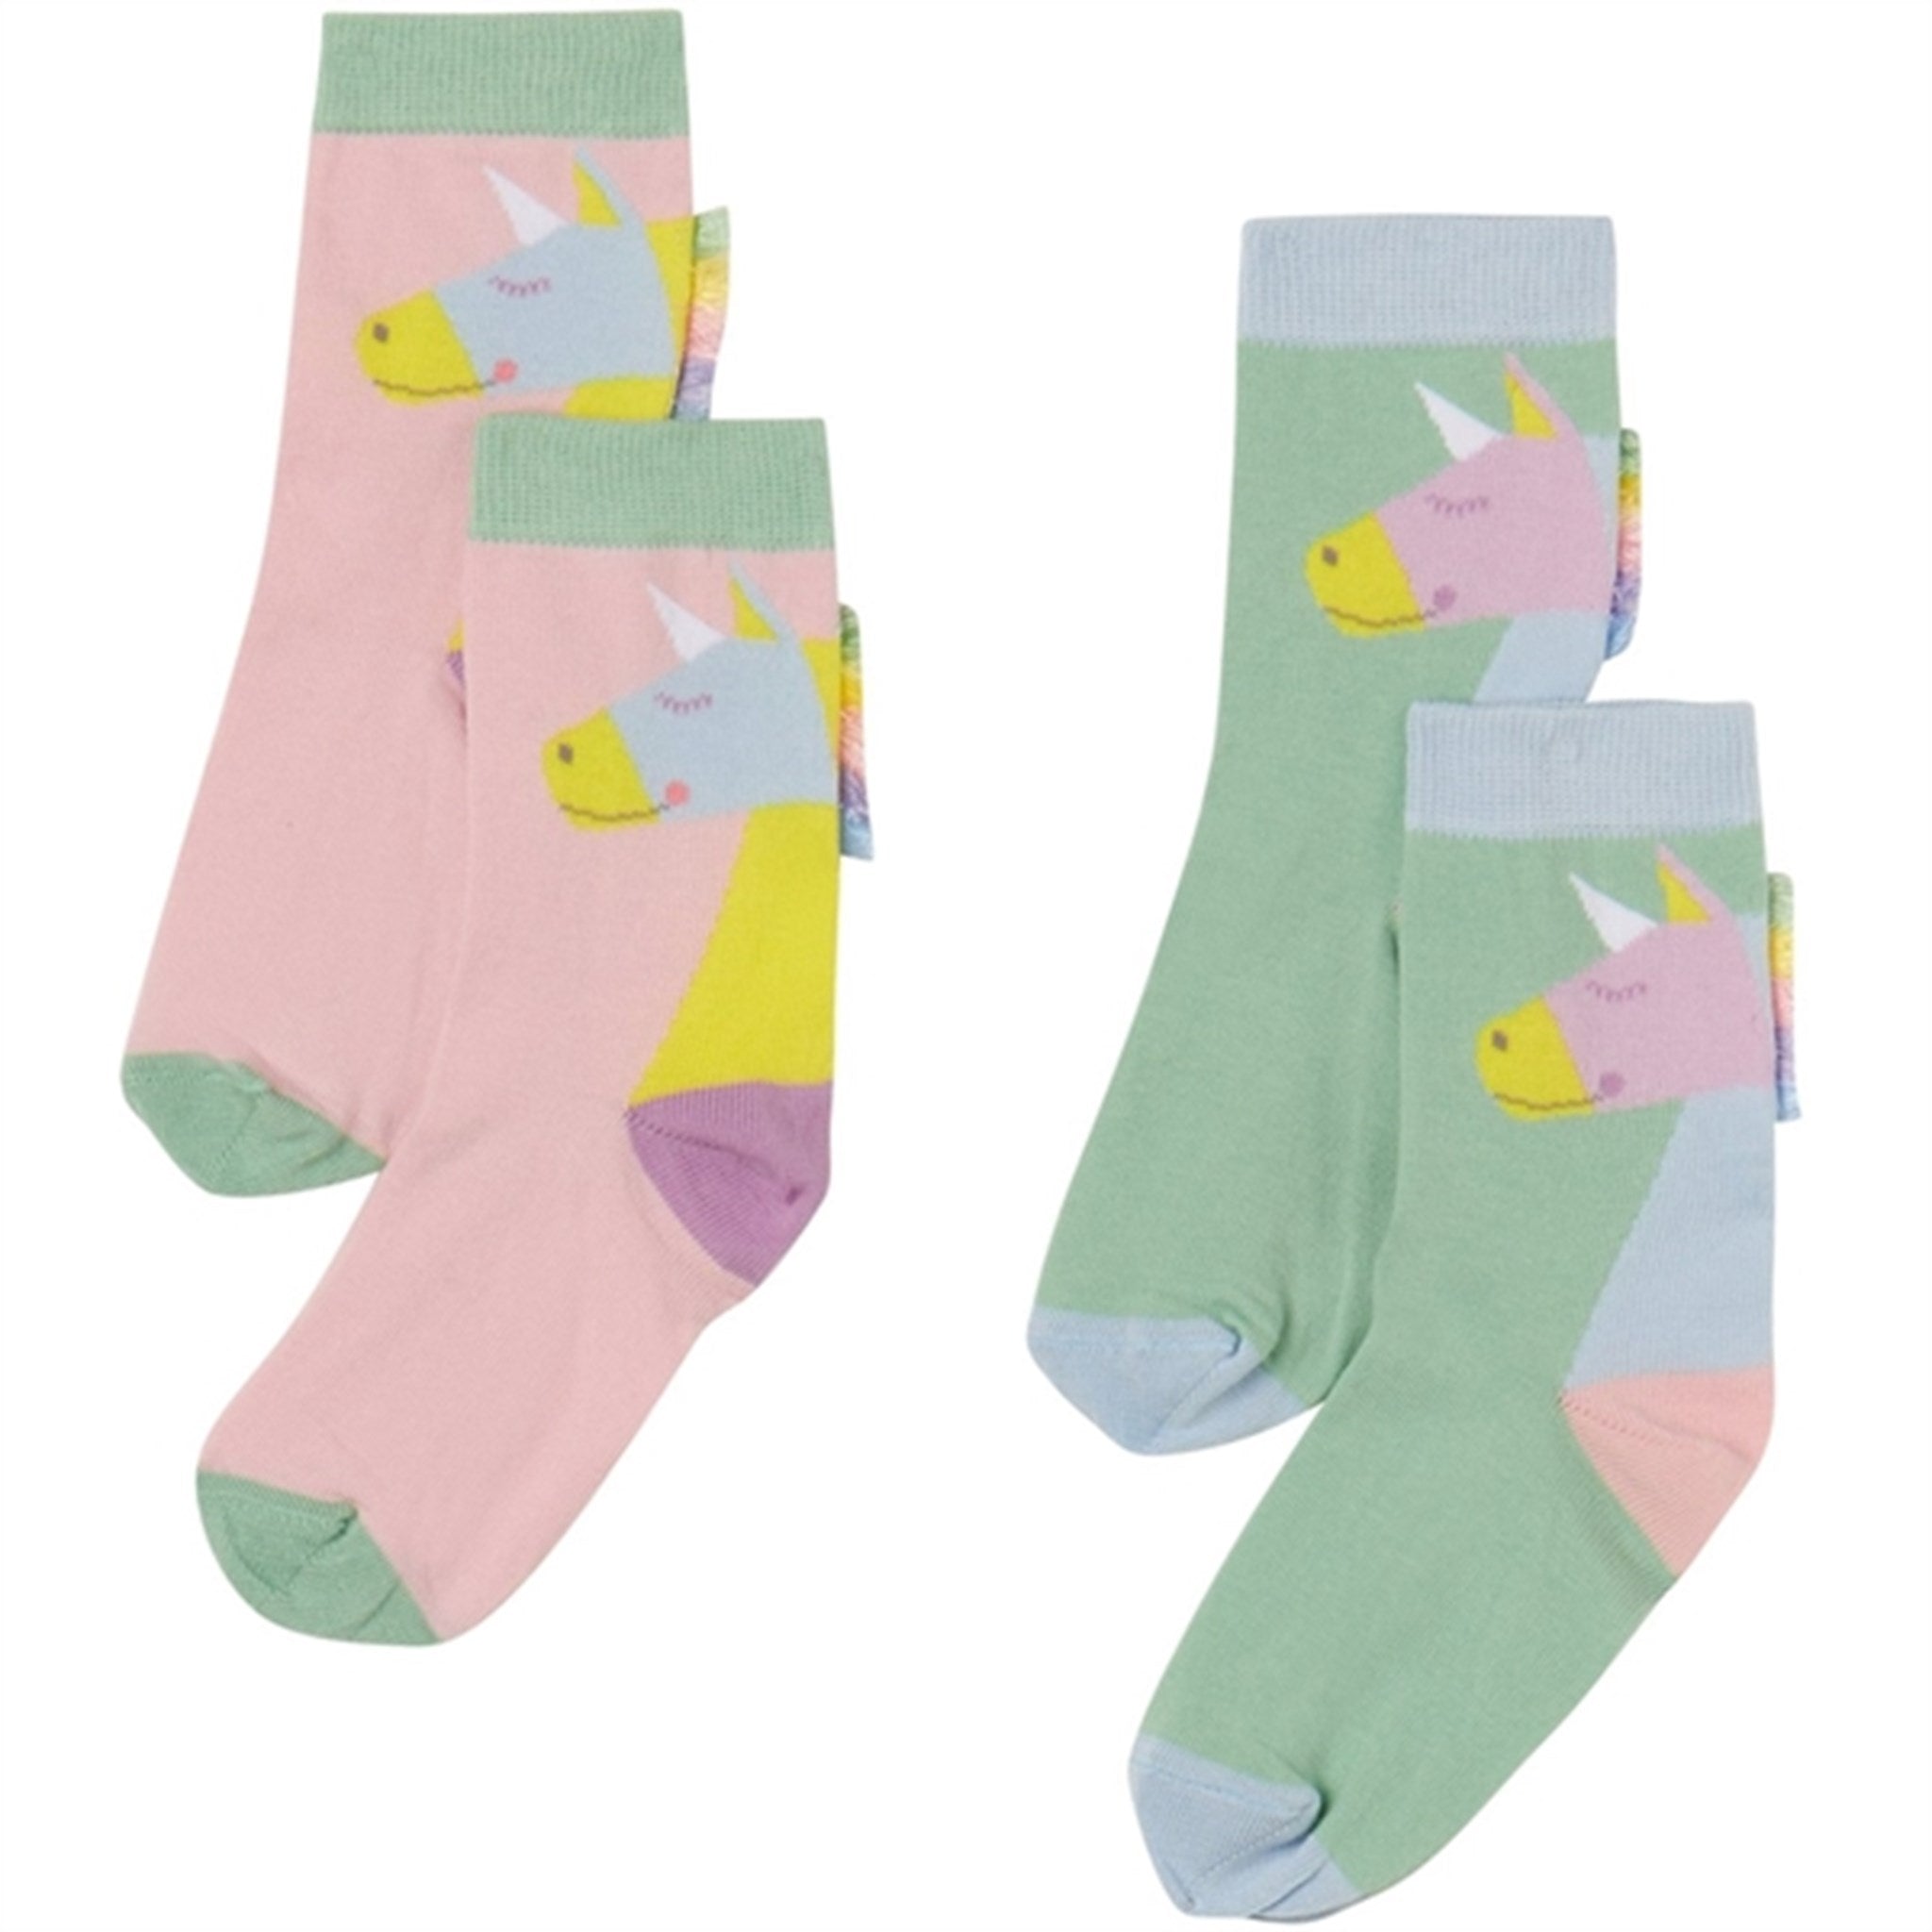 Stella McCartney Colourful Socks